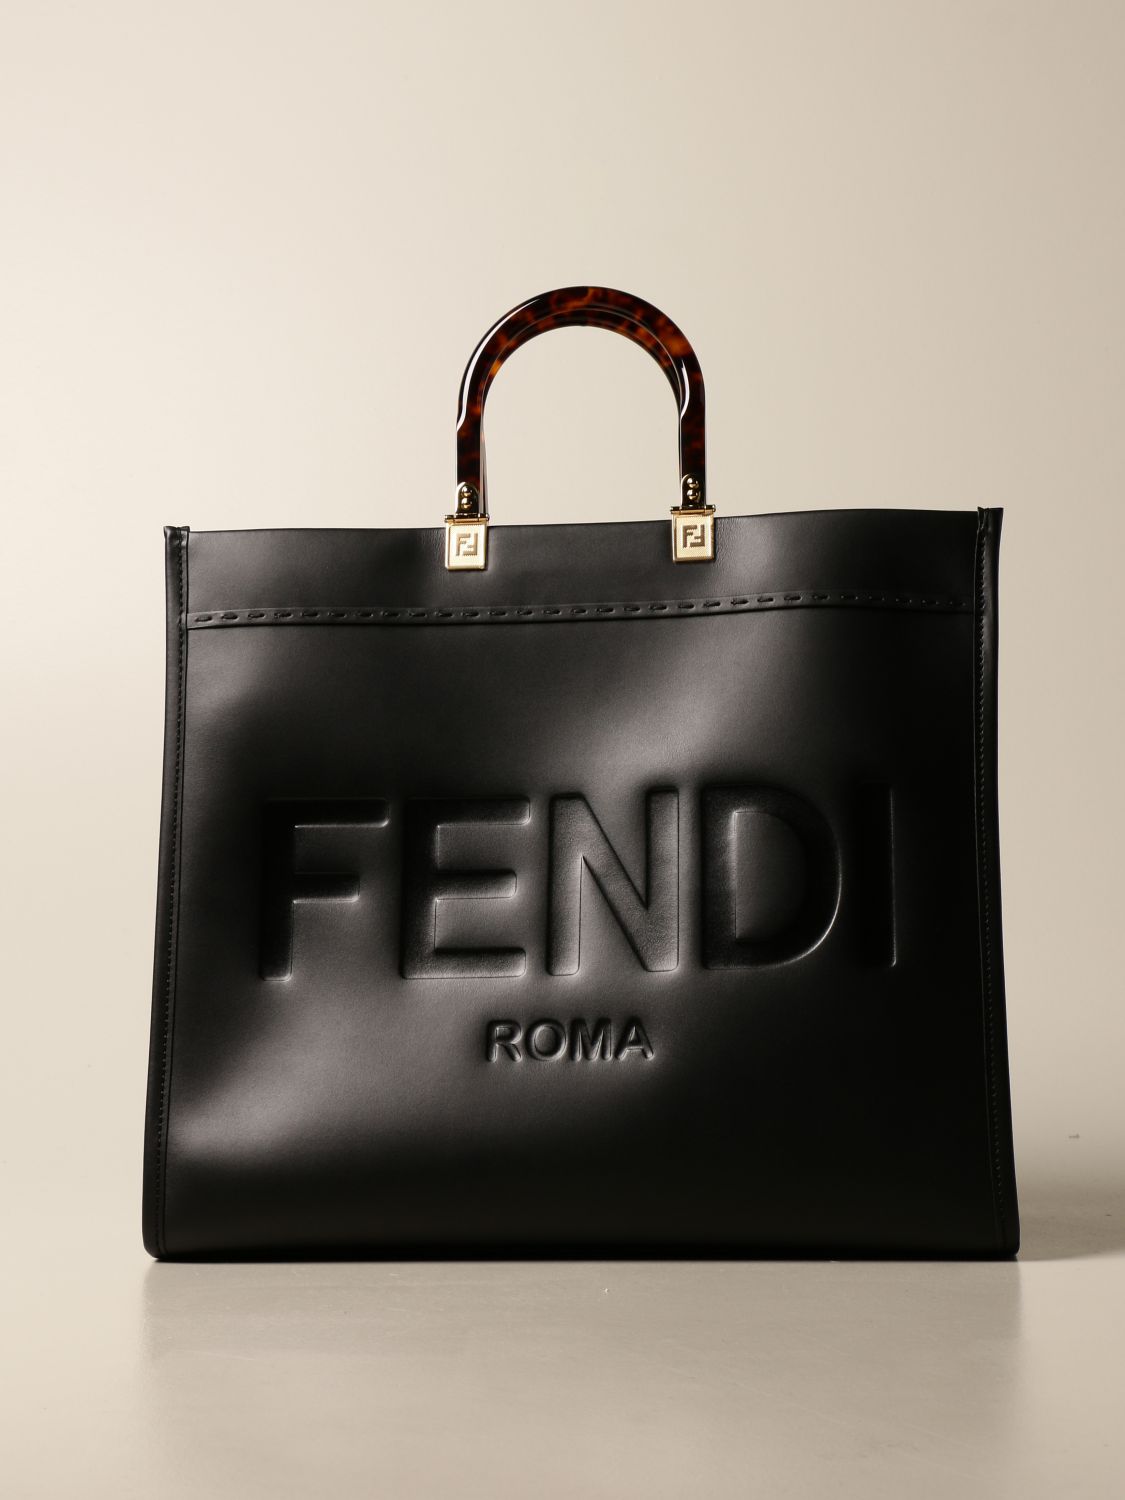 black leather fendi bag